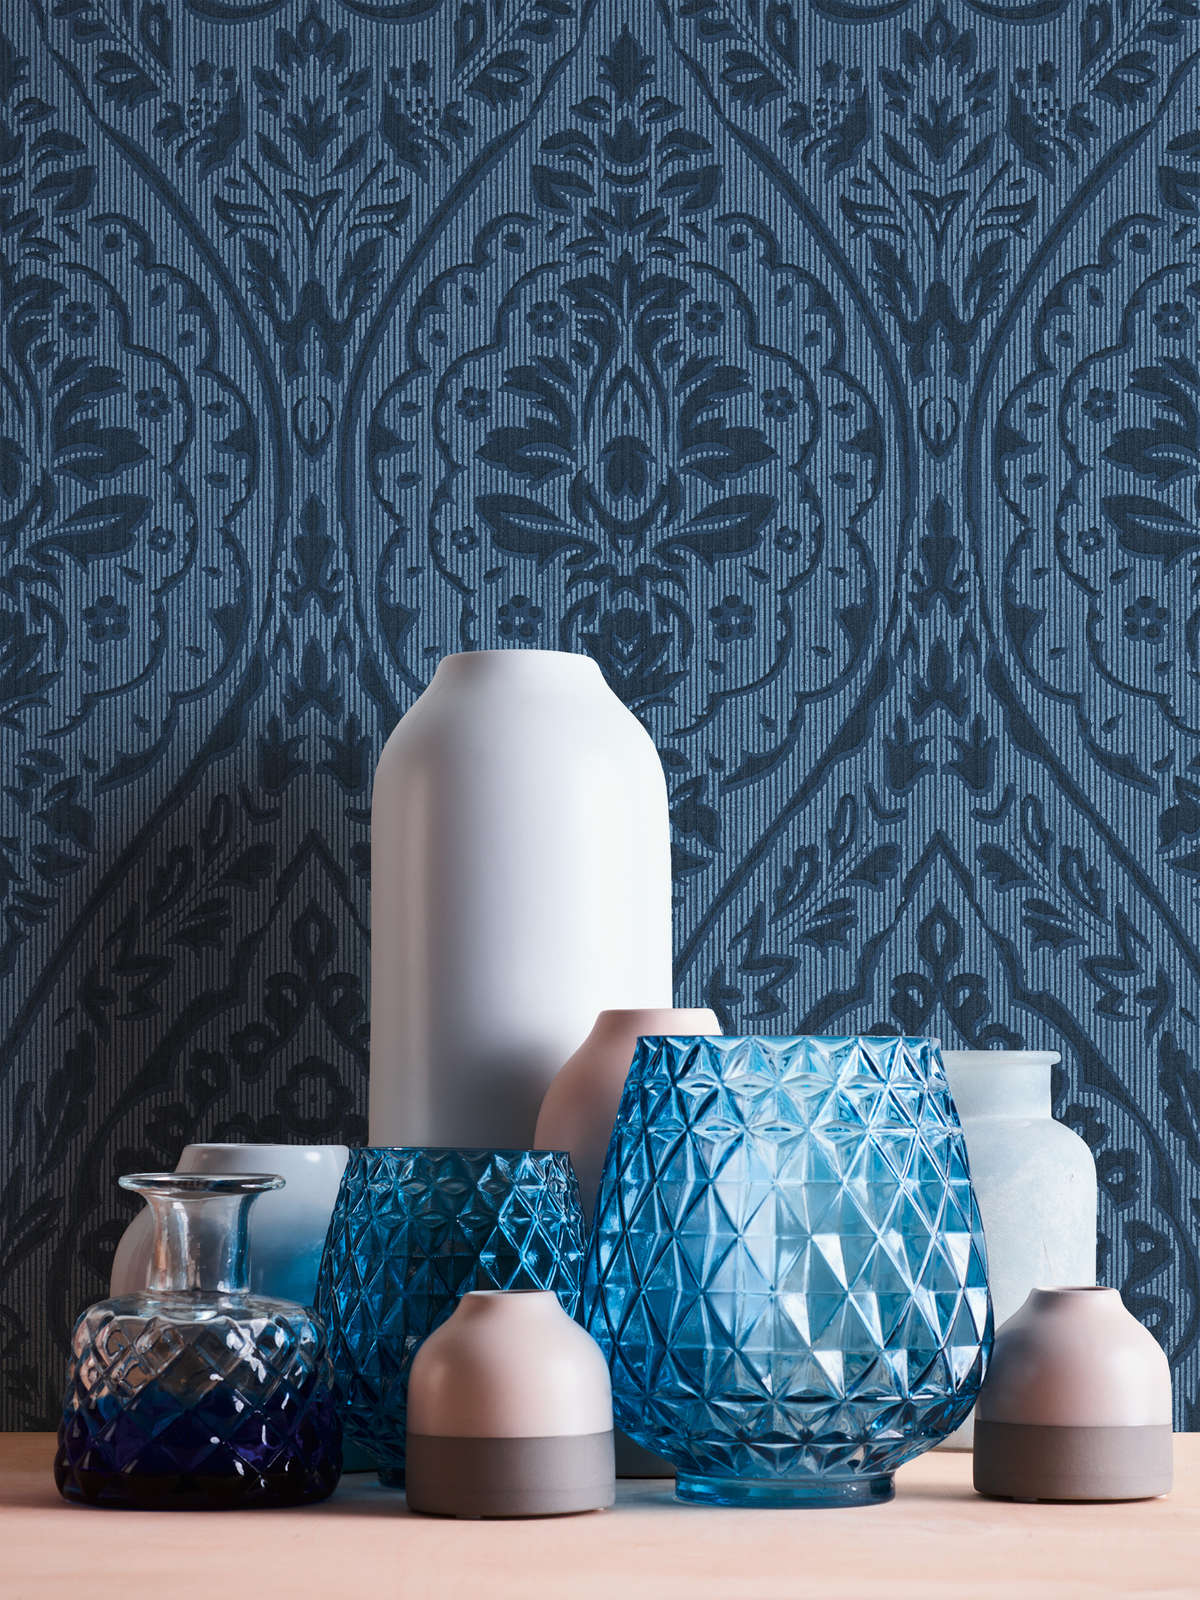             Non-woven wallpaper floral ornaments - blue
        